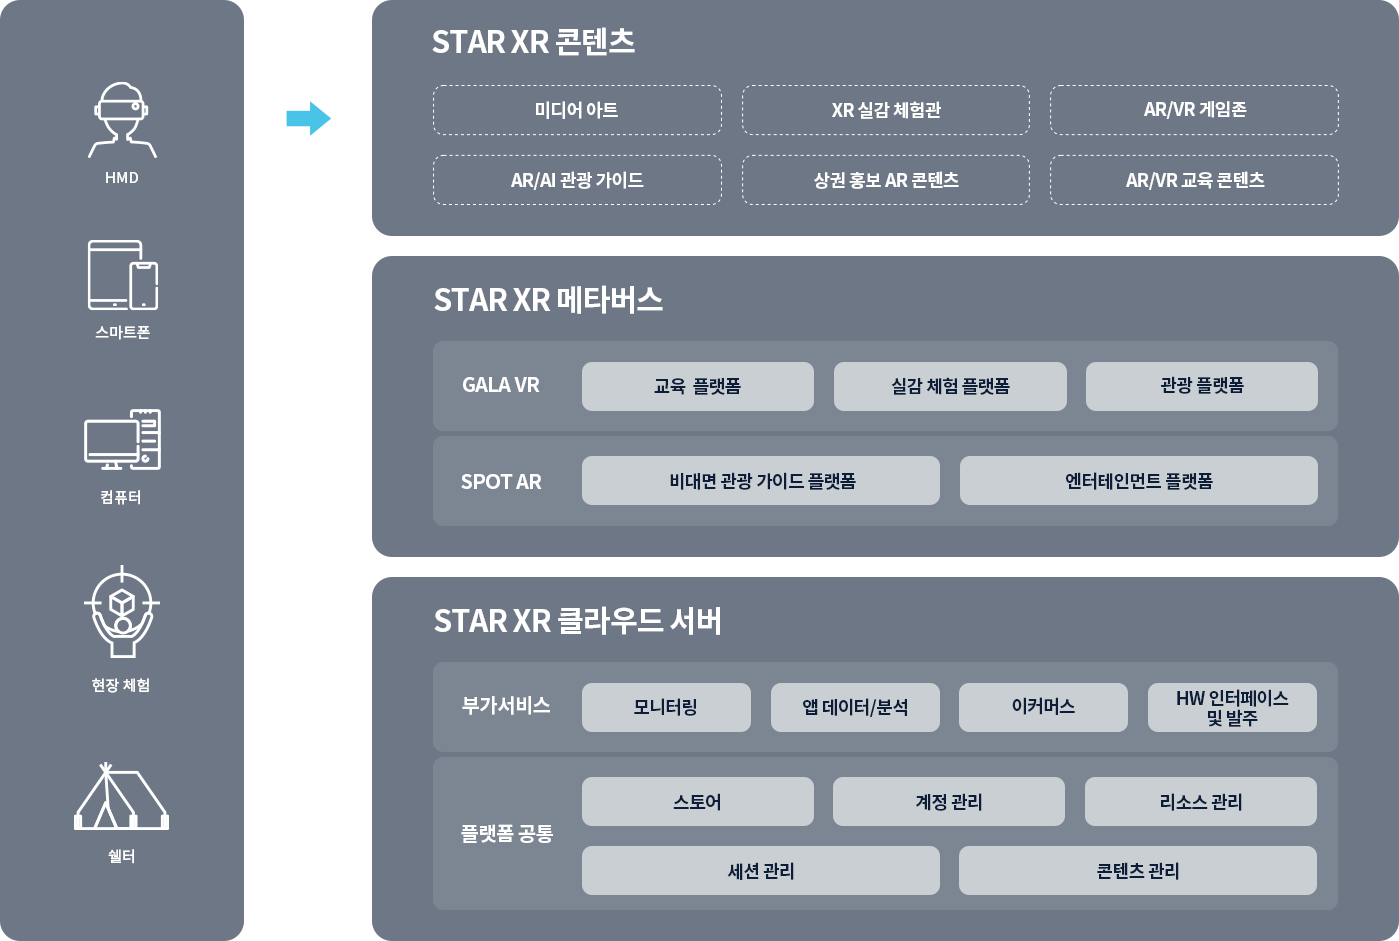 HMD, 스마트폰, 컴퓨터, 현장 체험, 쉘터 → STAR XR zhsxpscm, STAR XR 메타버스, STAR XR 클라우드 서버